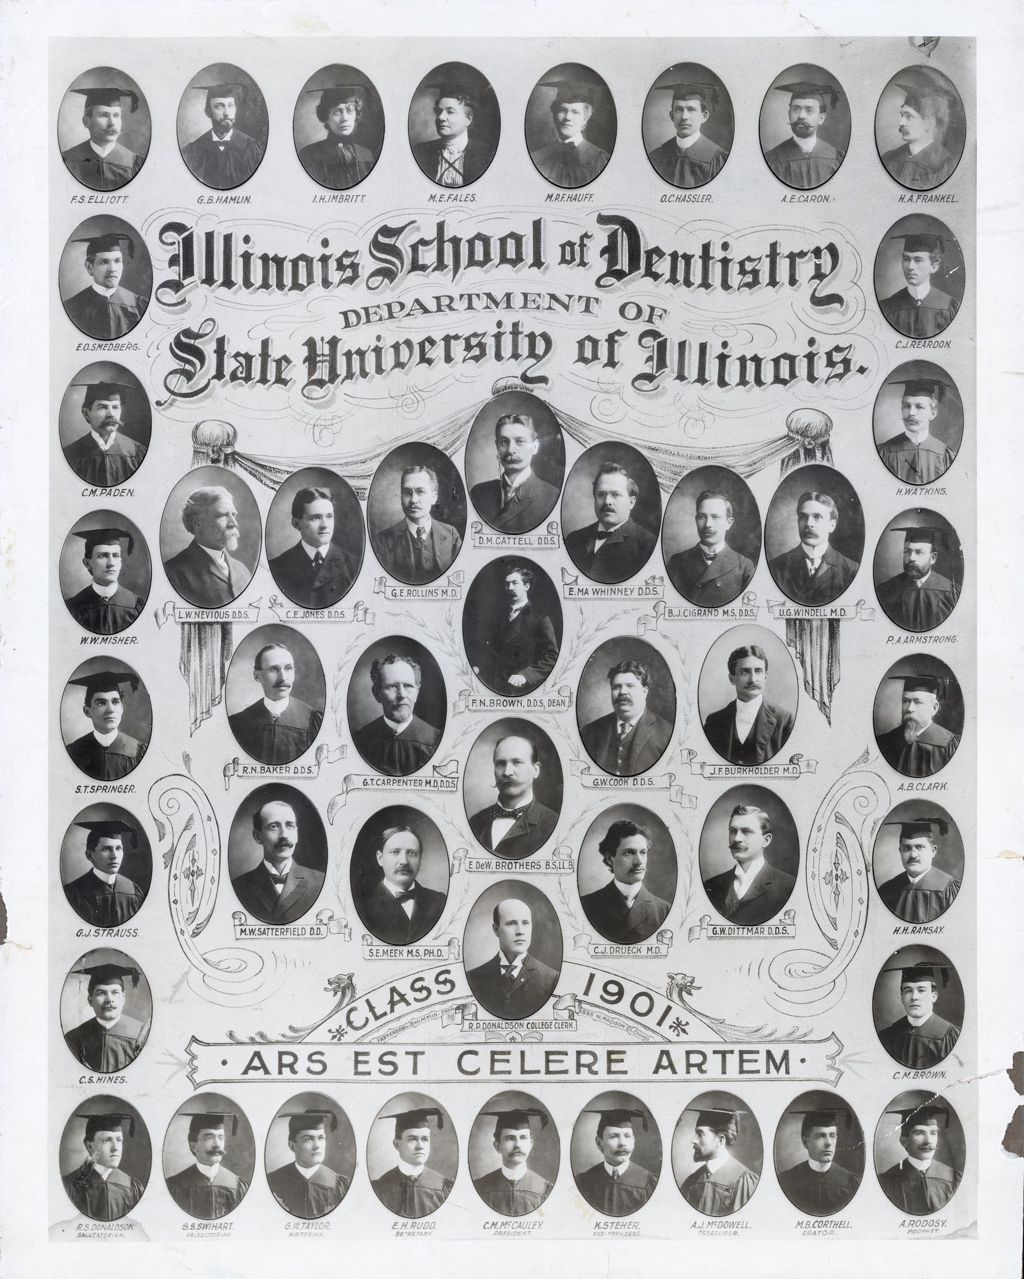 1901 graduating class, University of Illinois College of Dentistry